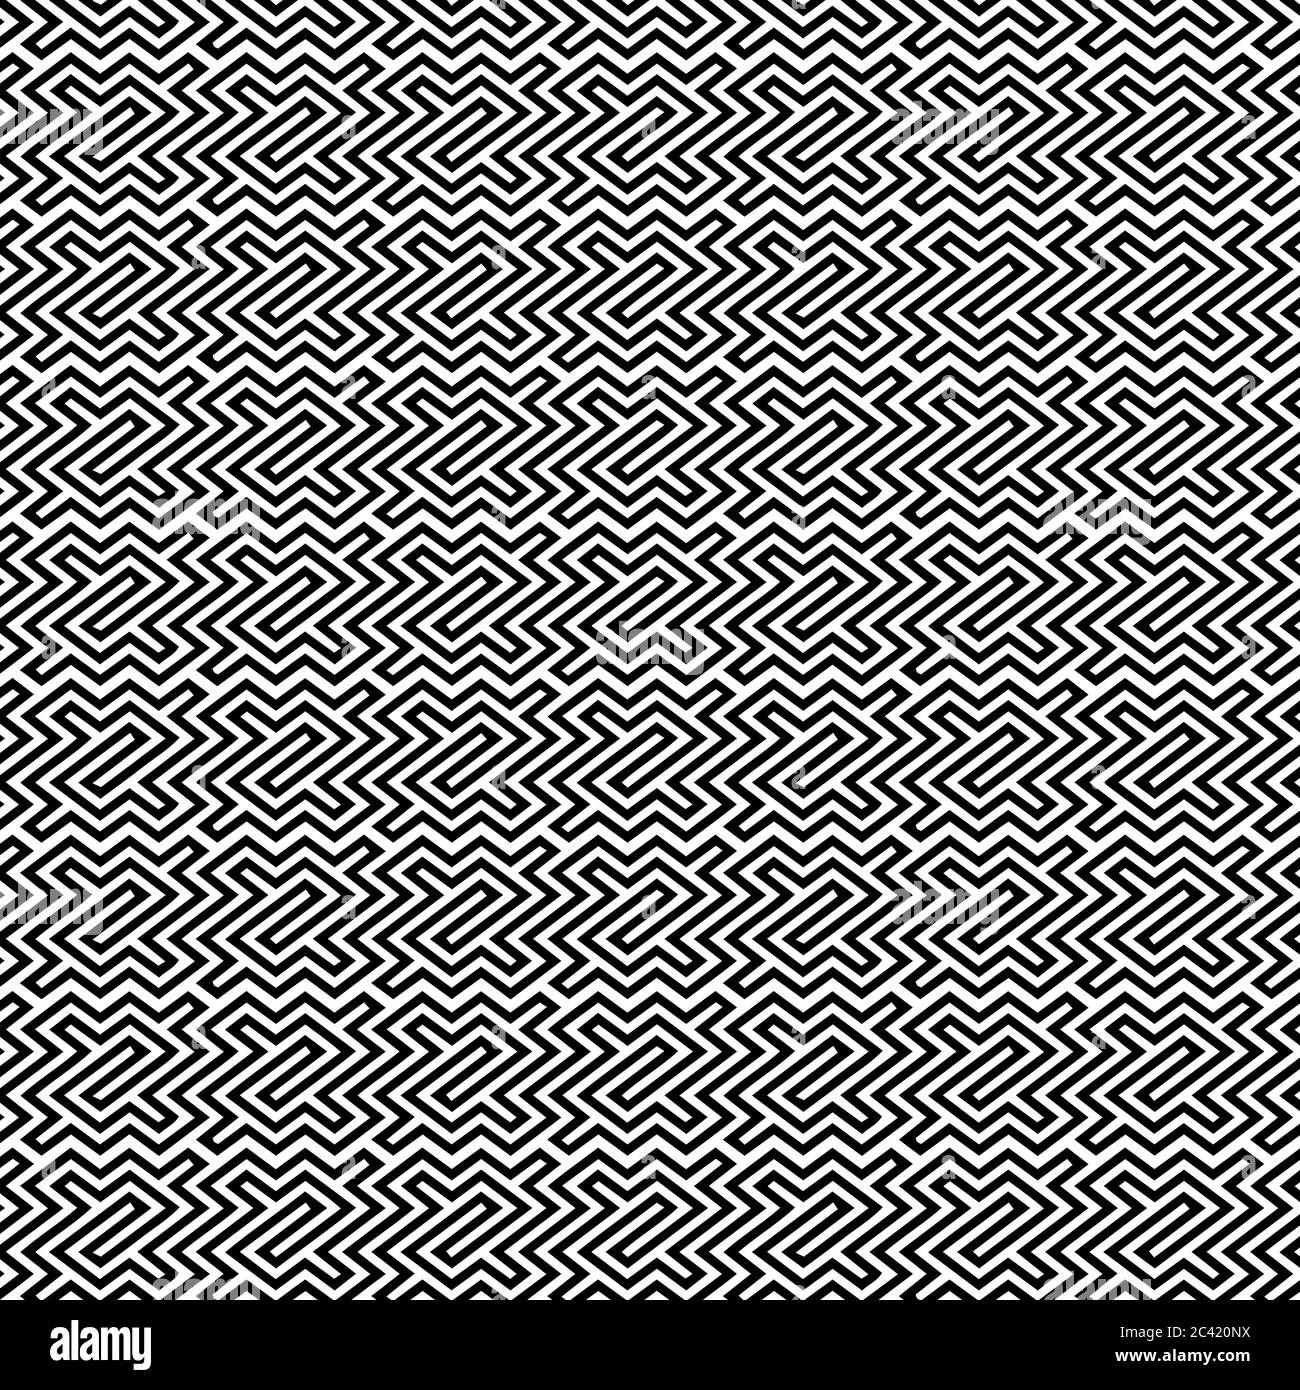 pattern design geometric seamless african tribute background black and white vector web illustration eps10 illustrator Stock Vector